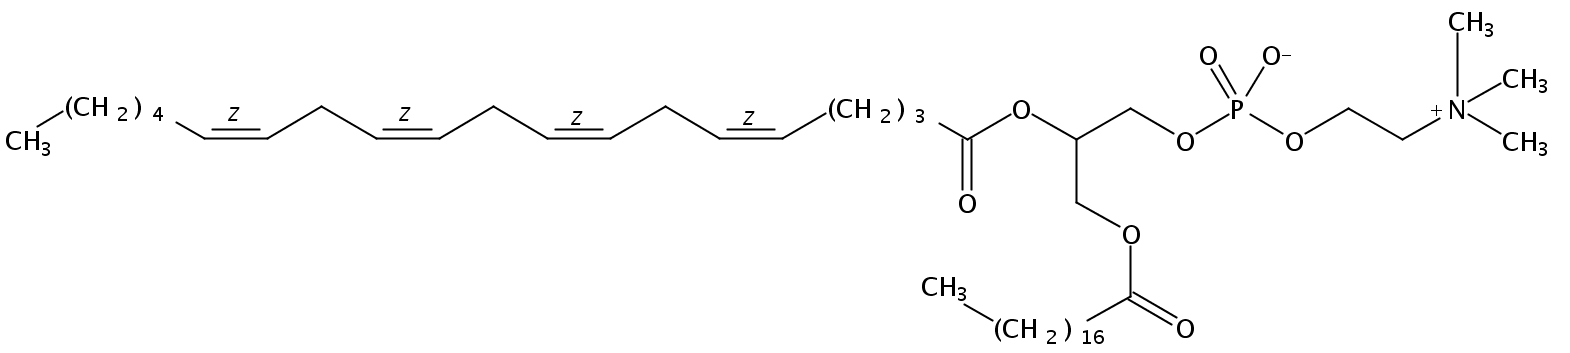 Structural formula of 1-Stearoyl-2-Arachidonoyl-sn-Glycero-3-Phosphatidylcholine